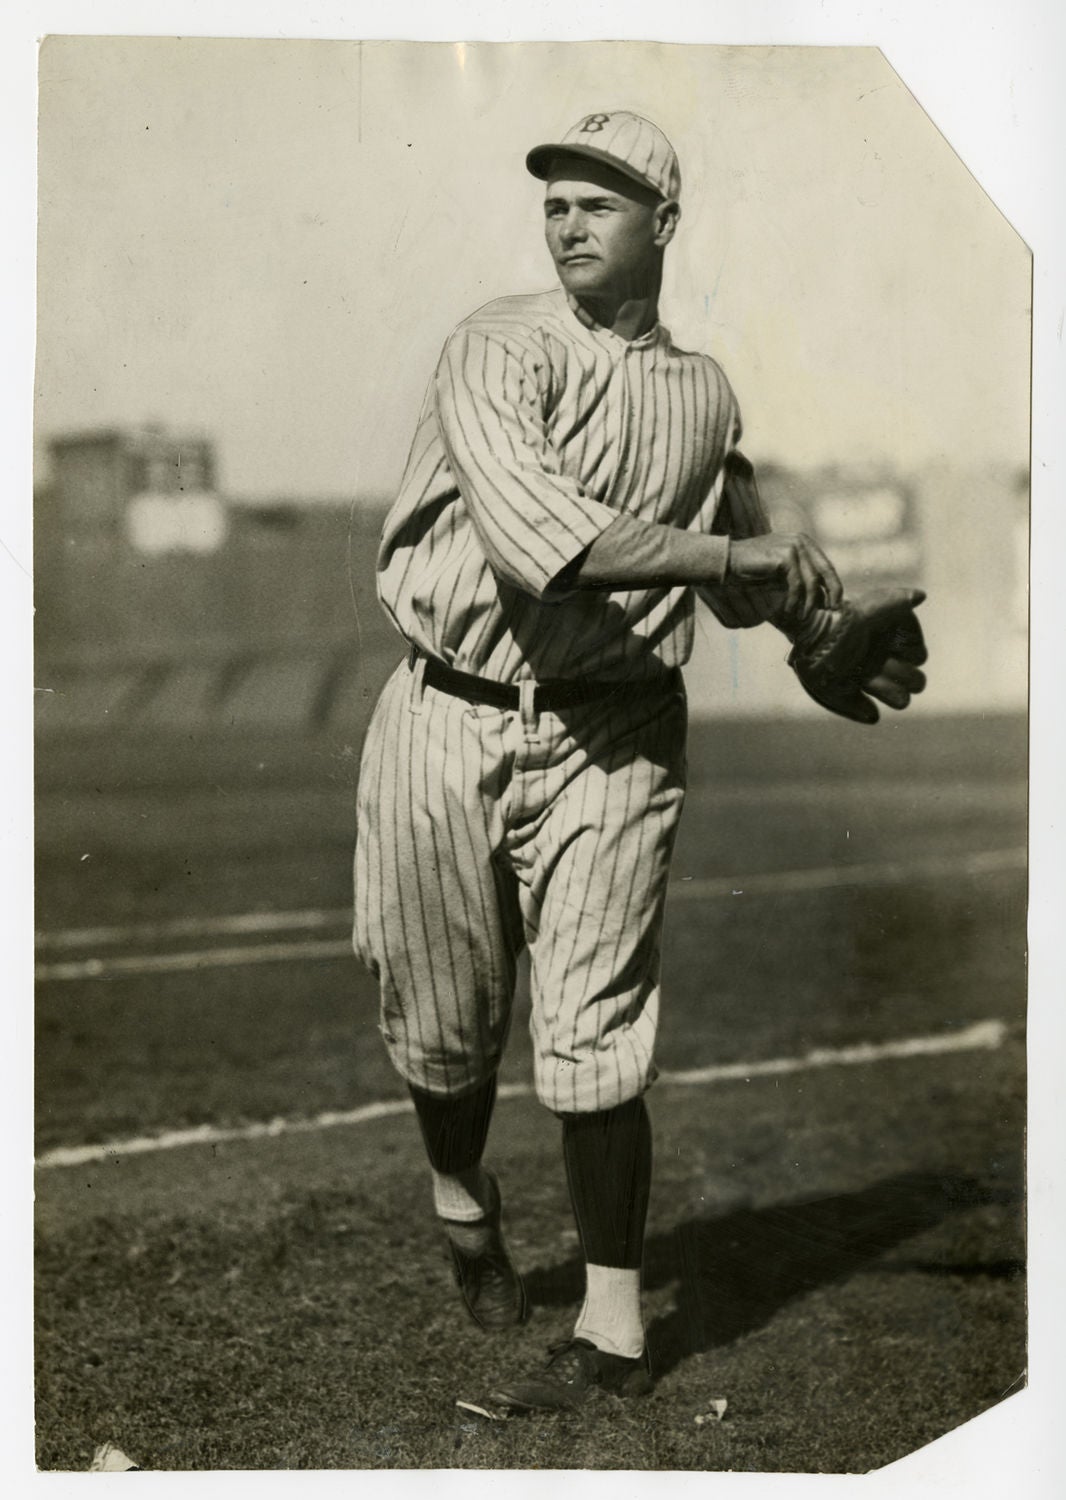 Brooklyn 1910's Zack Wheat Art Photo #55-8 x 10 image of HOF player c 